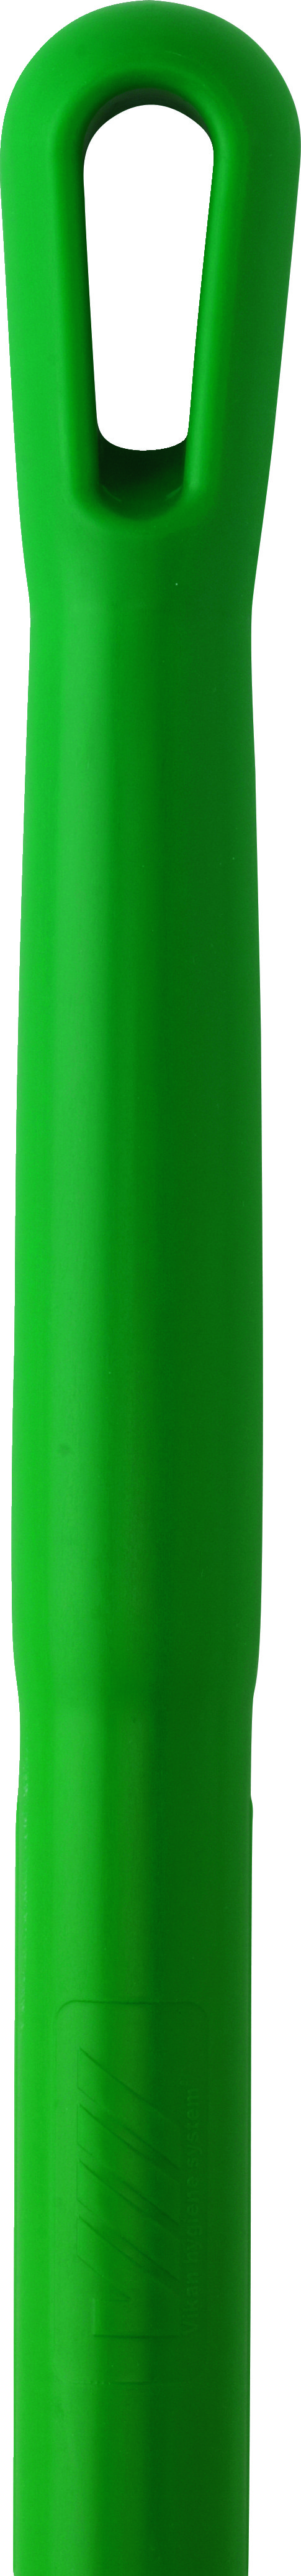 Рукоятка Vikan эргономичная алюминиевая, 1510 мм, зеленая